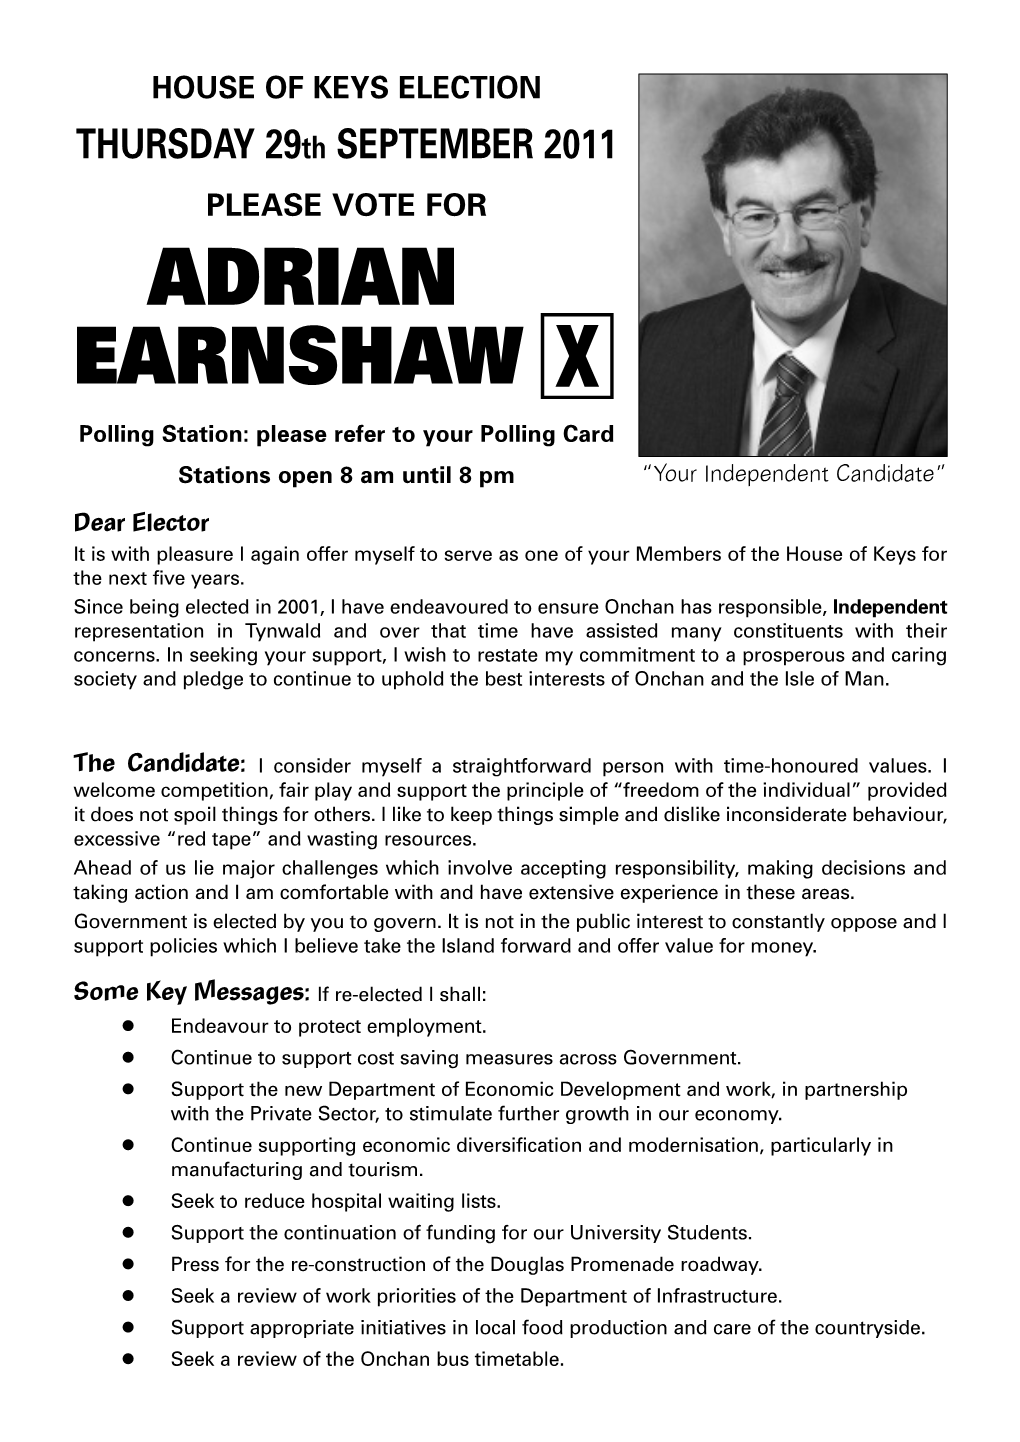 Earnshaw Manifesto